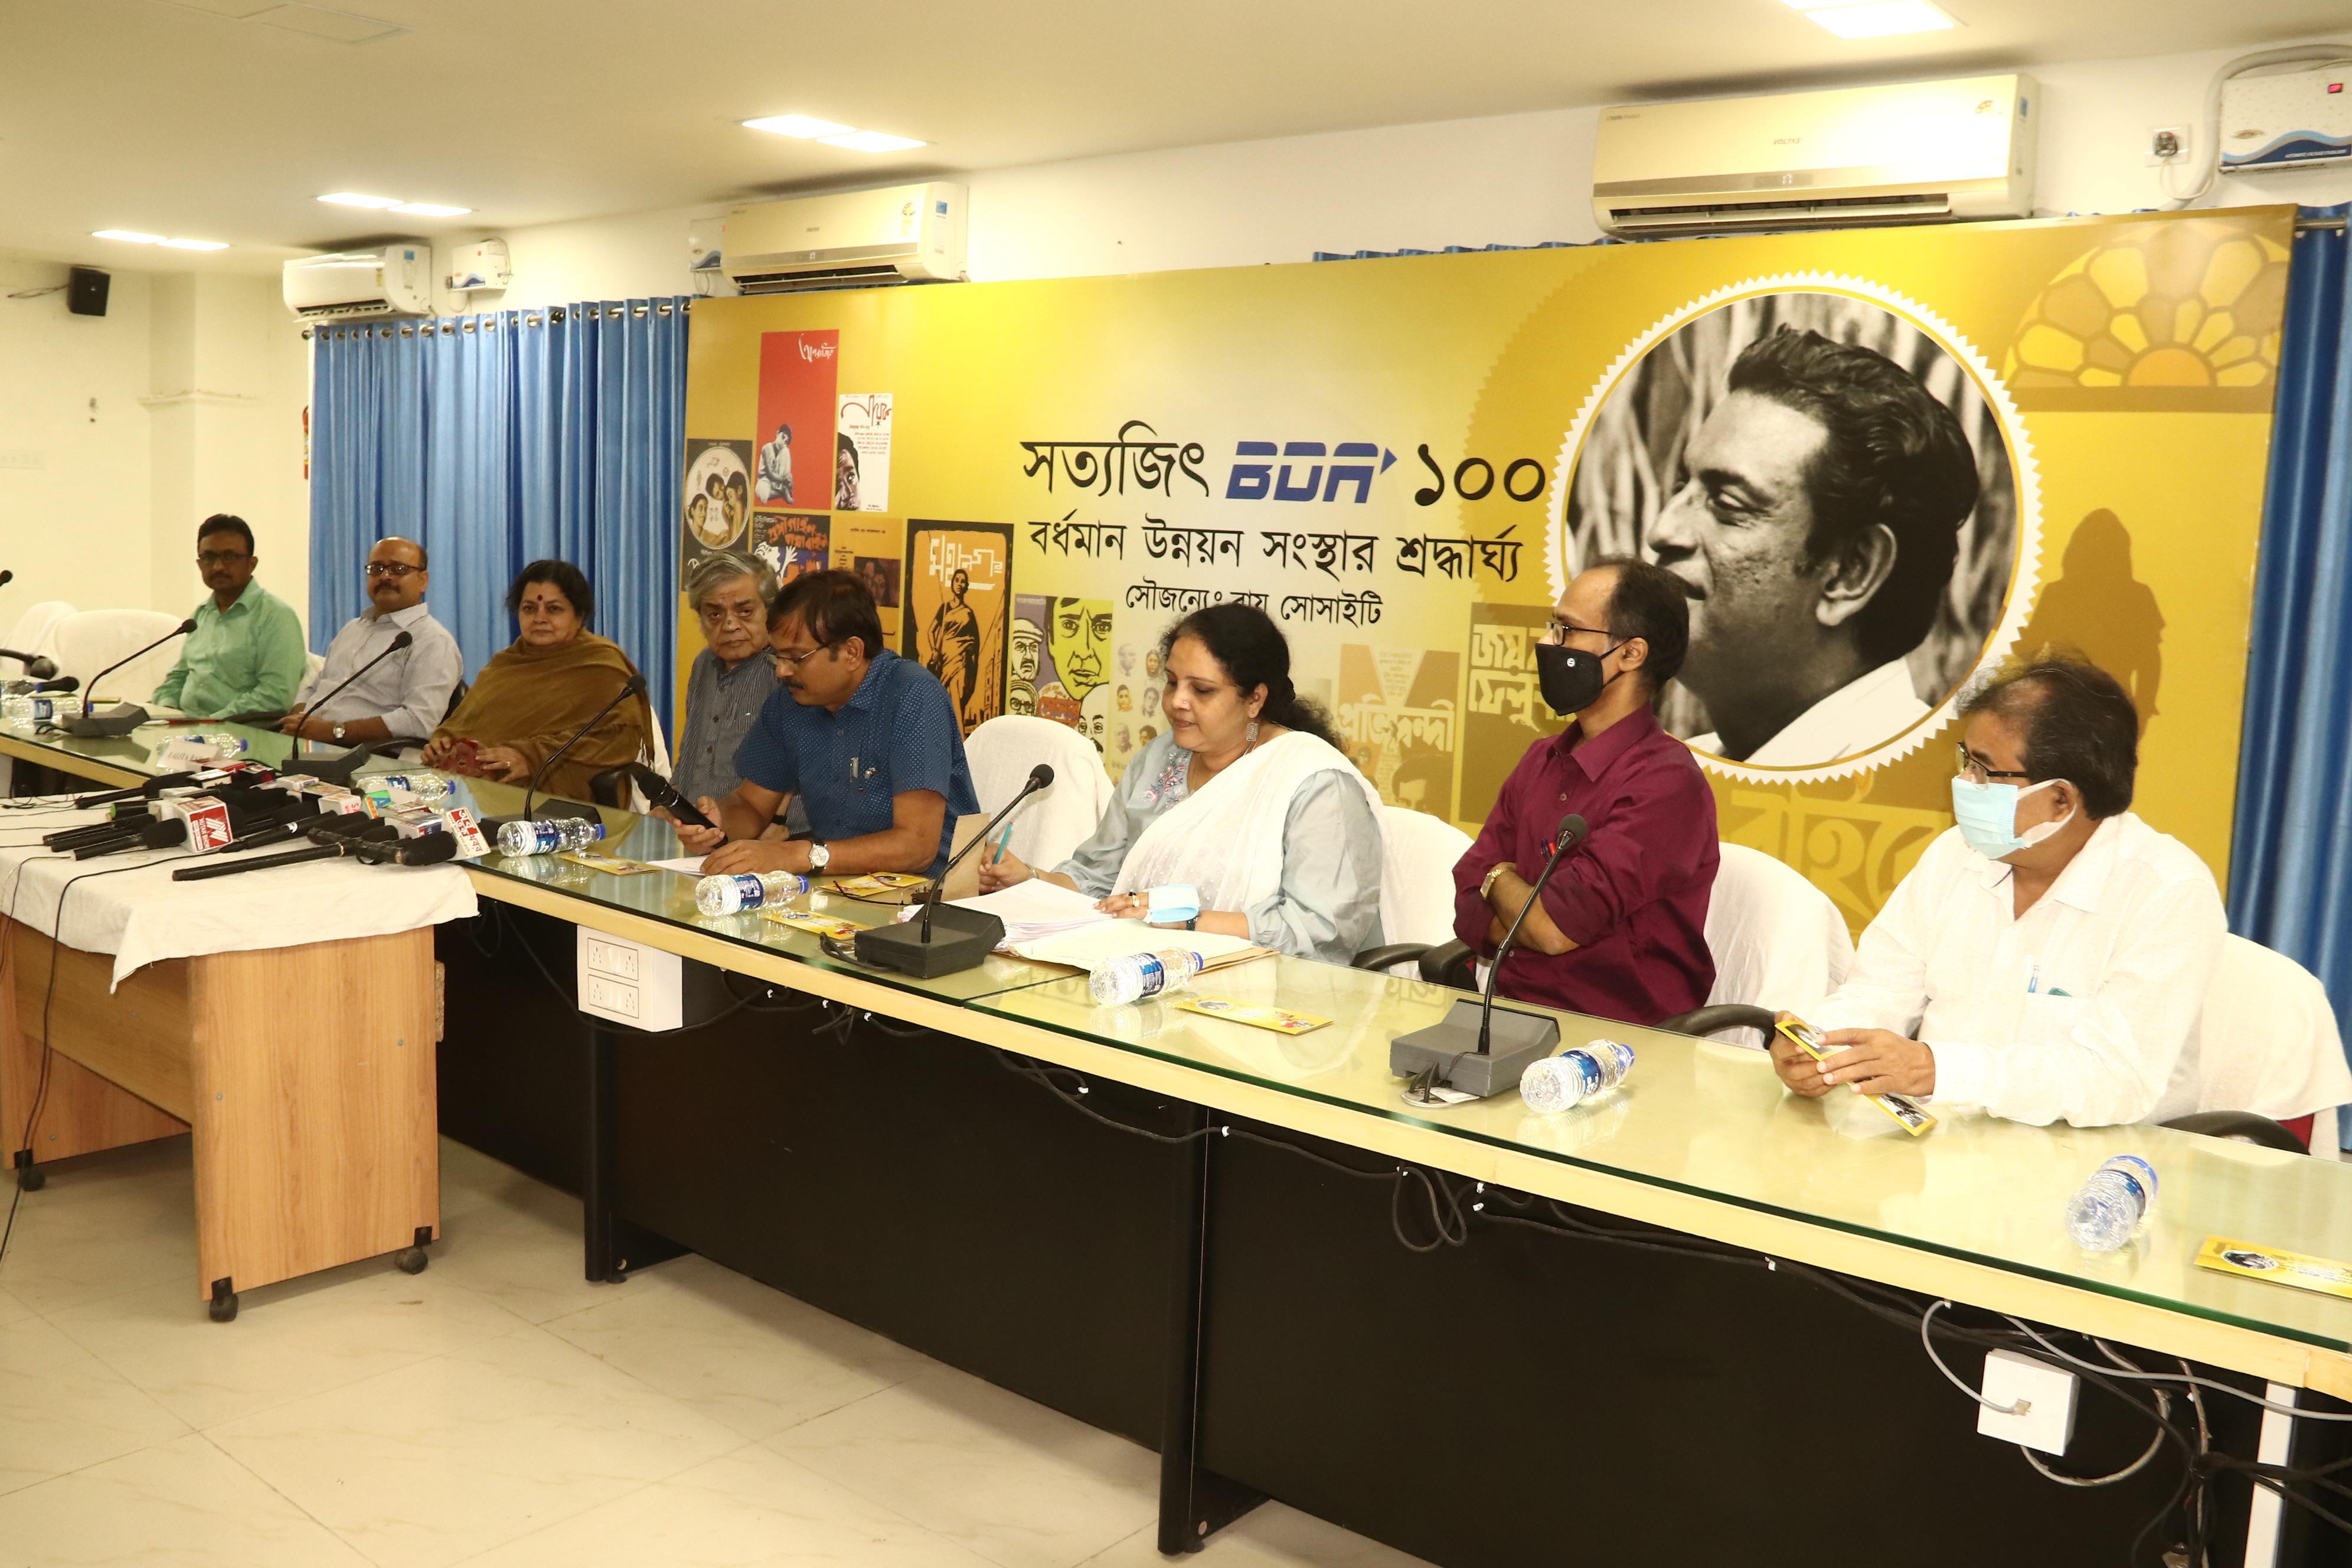 BDA's venture to celebrate the occasion of the birth centenary of Shri Satyajit Ray3